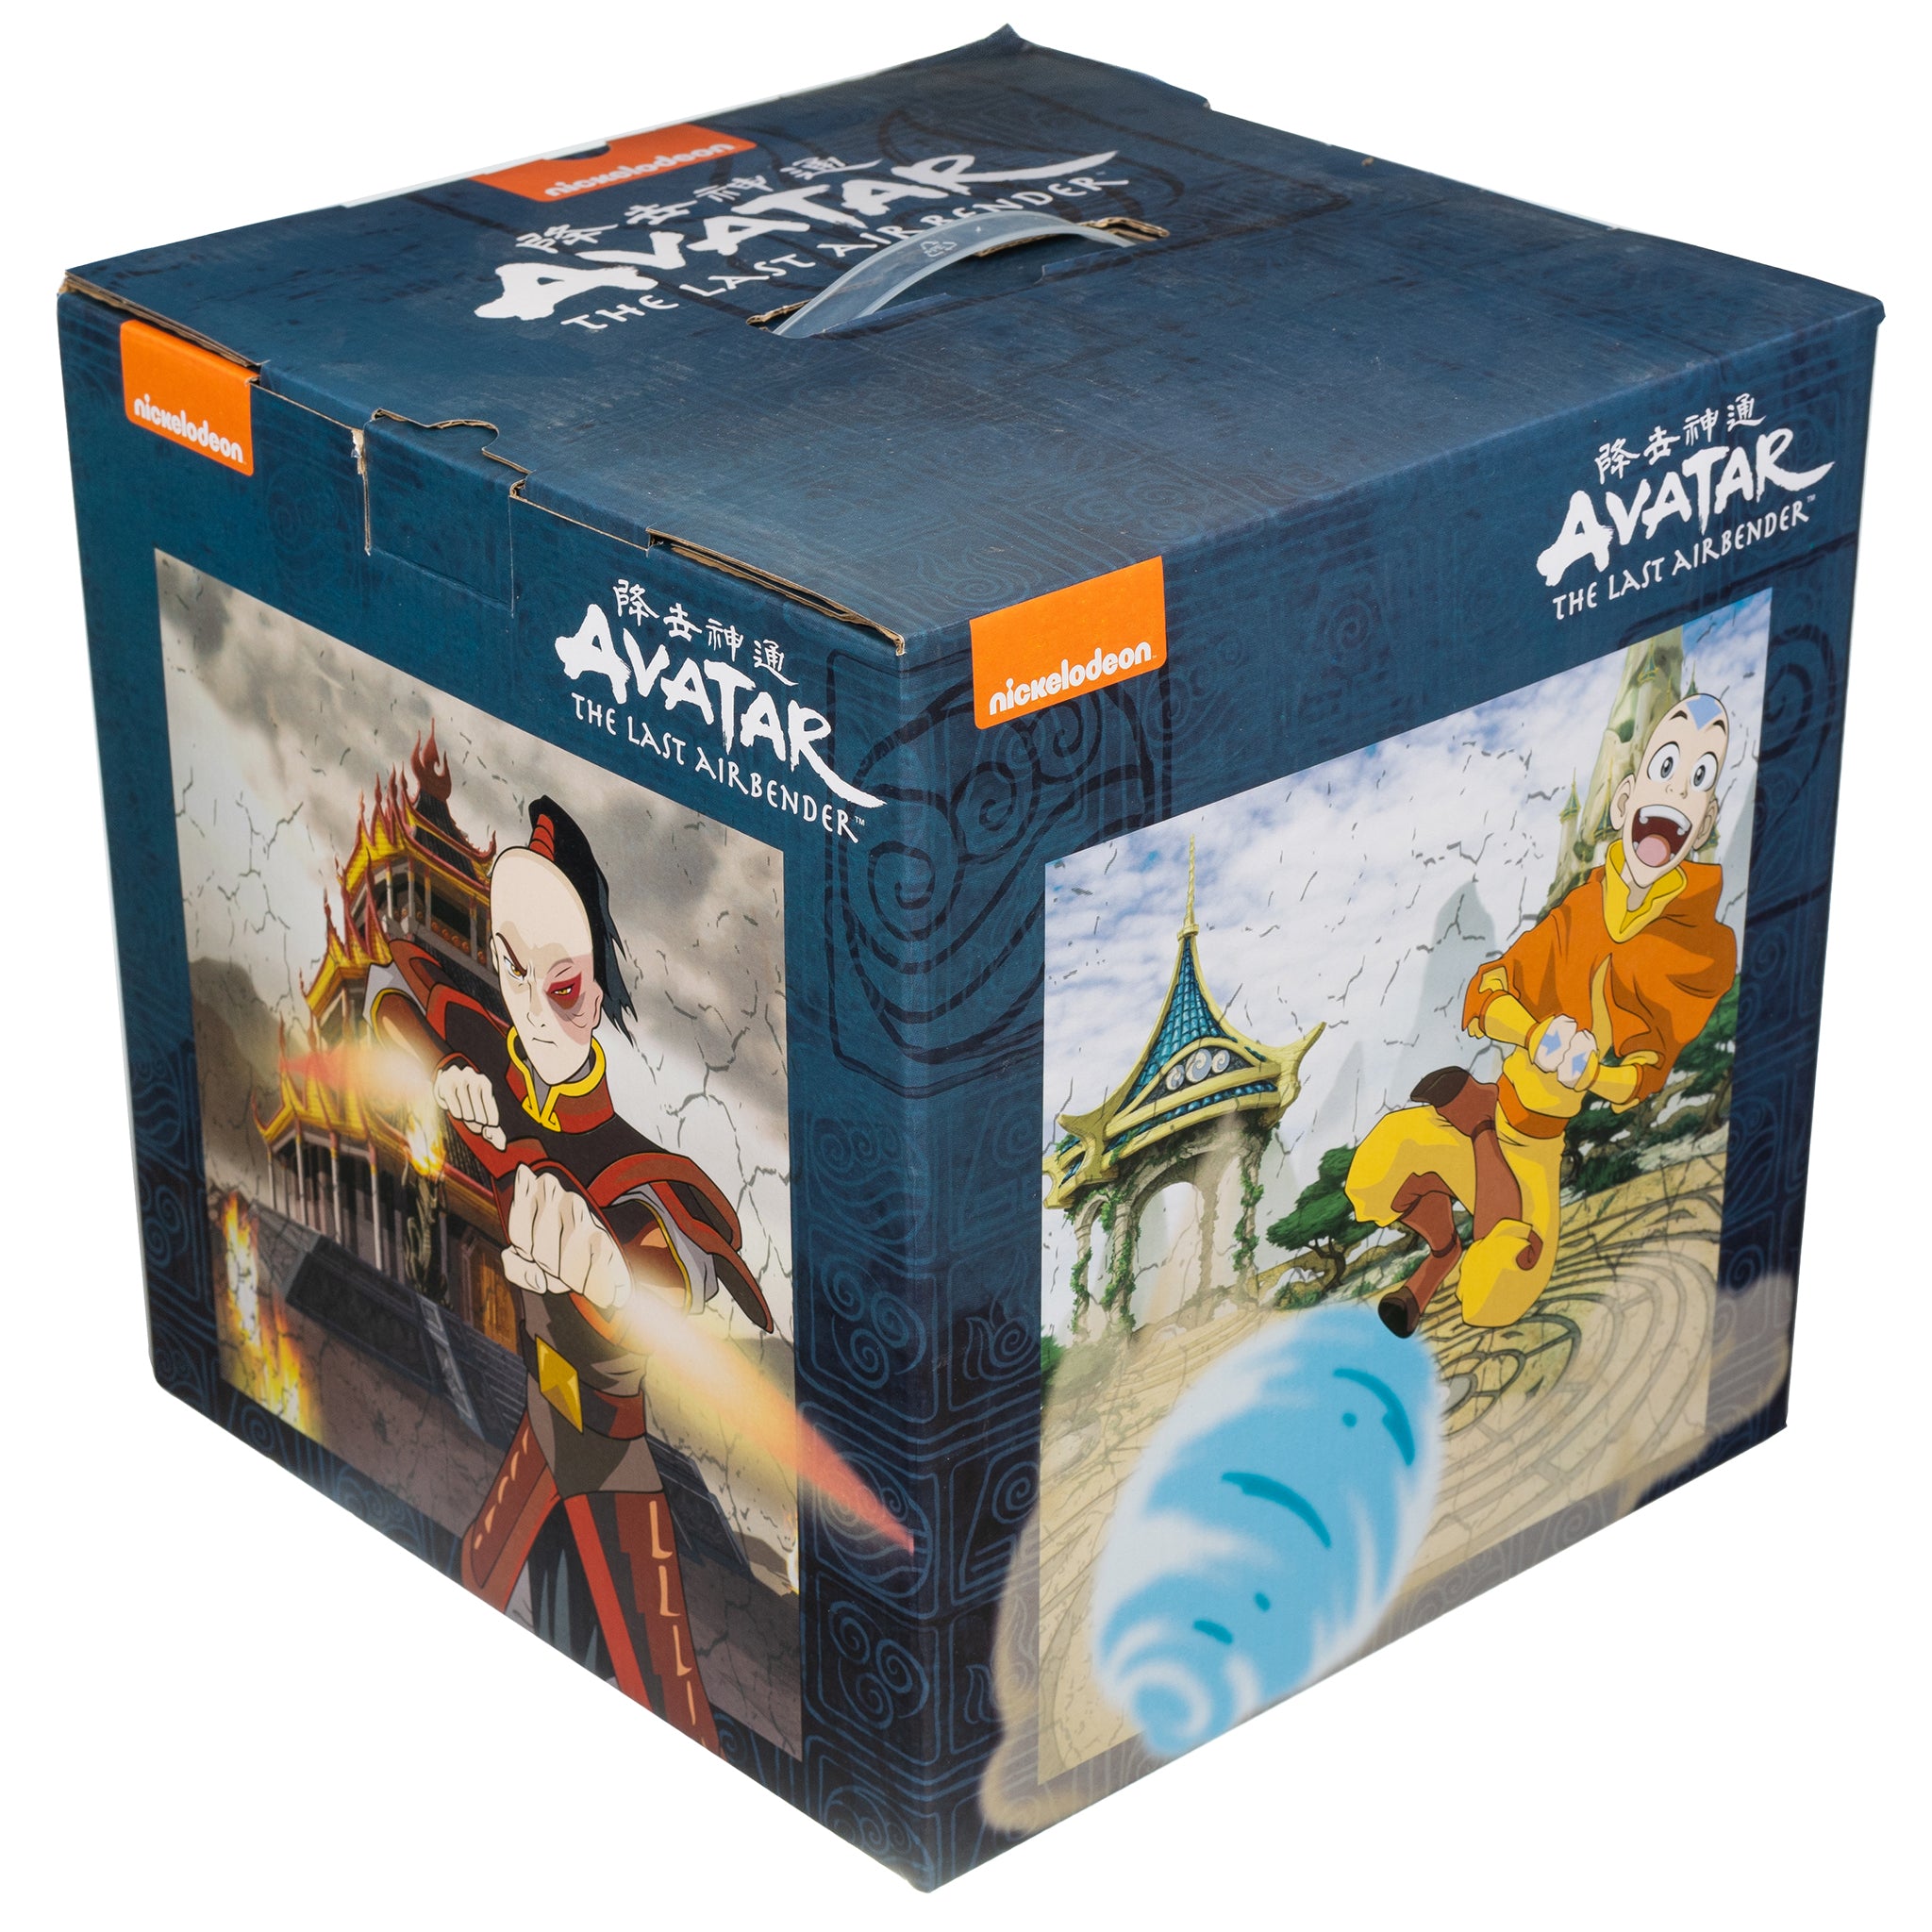 Avatar The Last Airbender Box